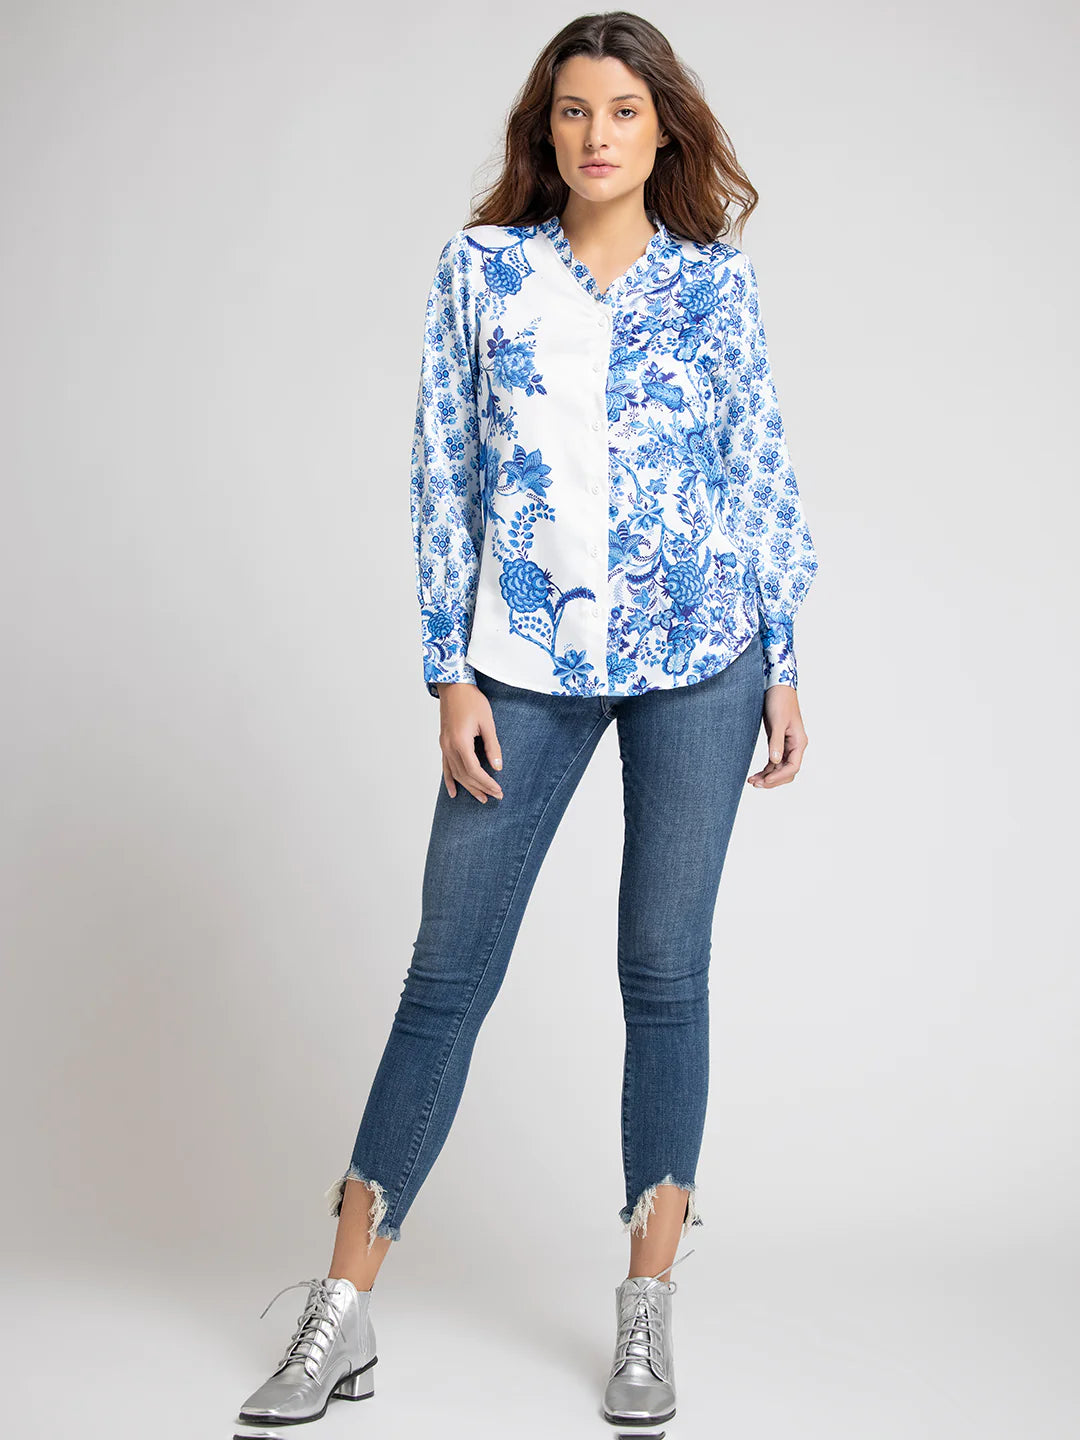 Blue Printed Shirt for Women | Indigo Elegance Printed Satin Shirt